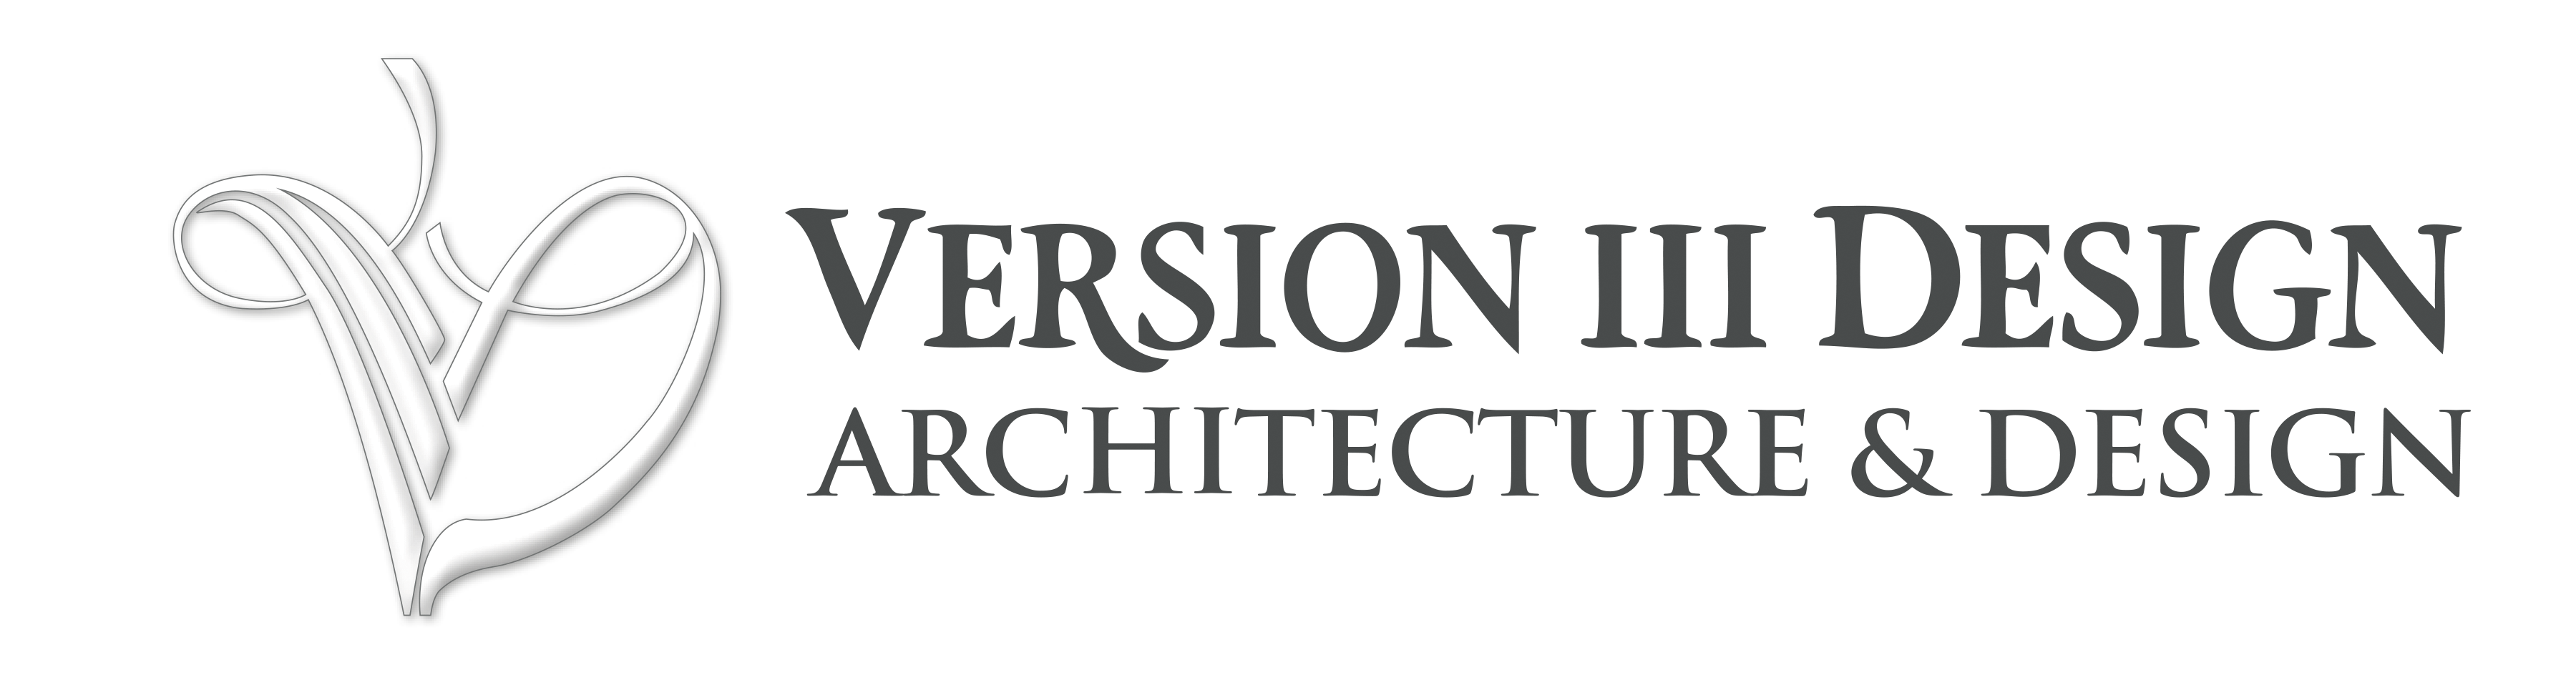 Version III Design, architecture & design